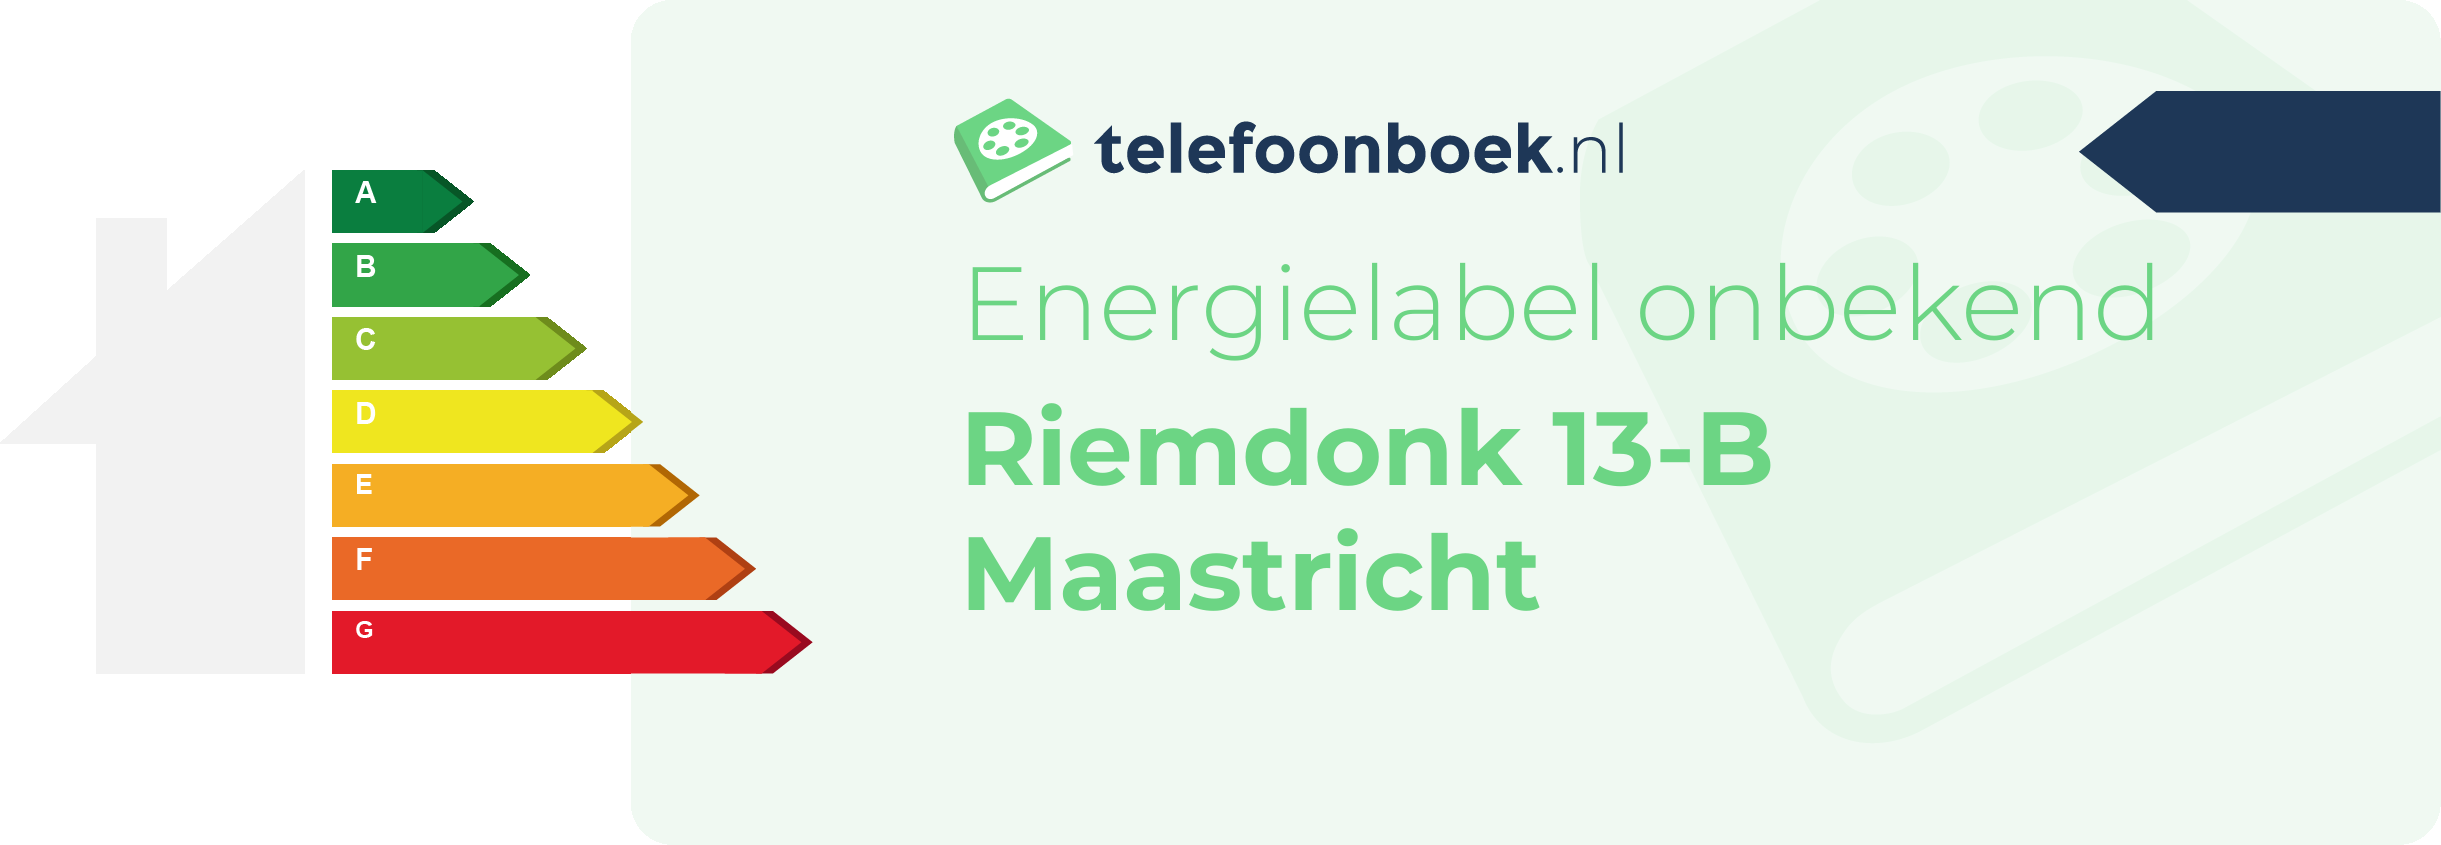 Energielabel Riemdonk 13-B Maastricht